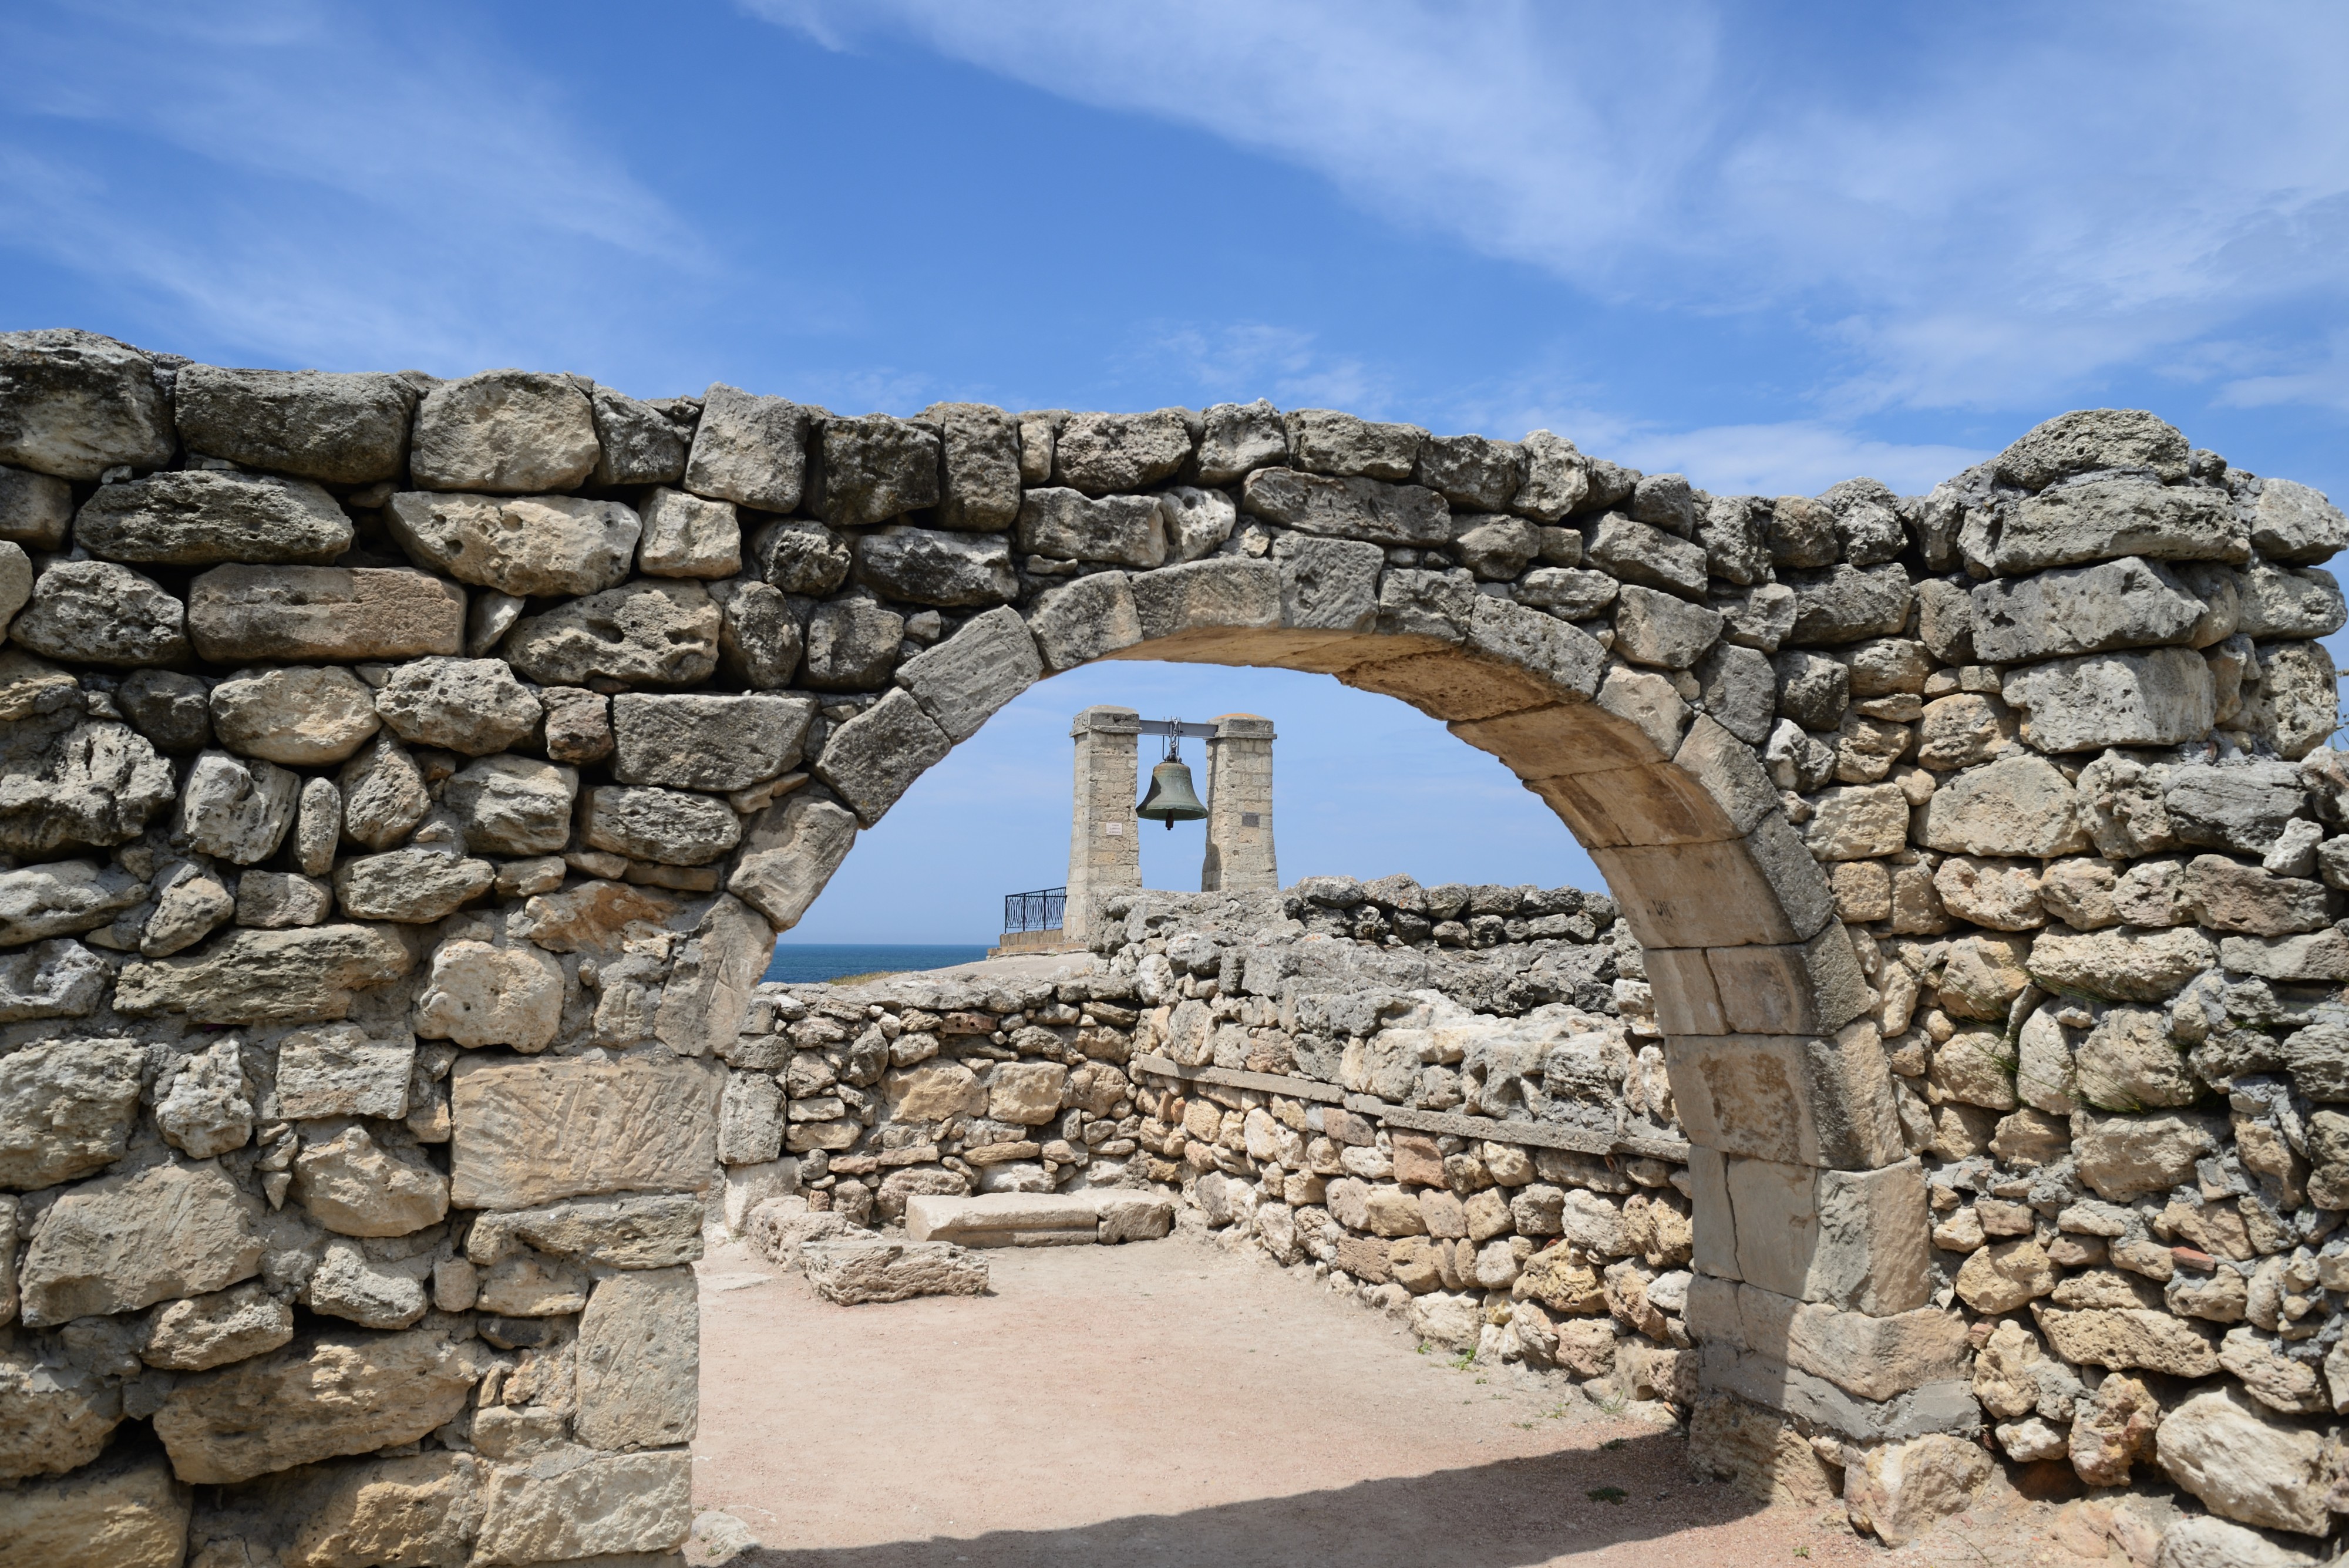 The bell of Chersonesos